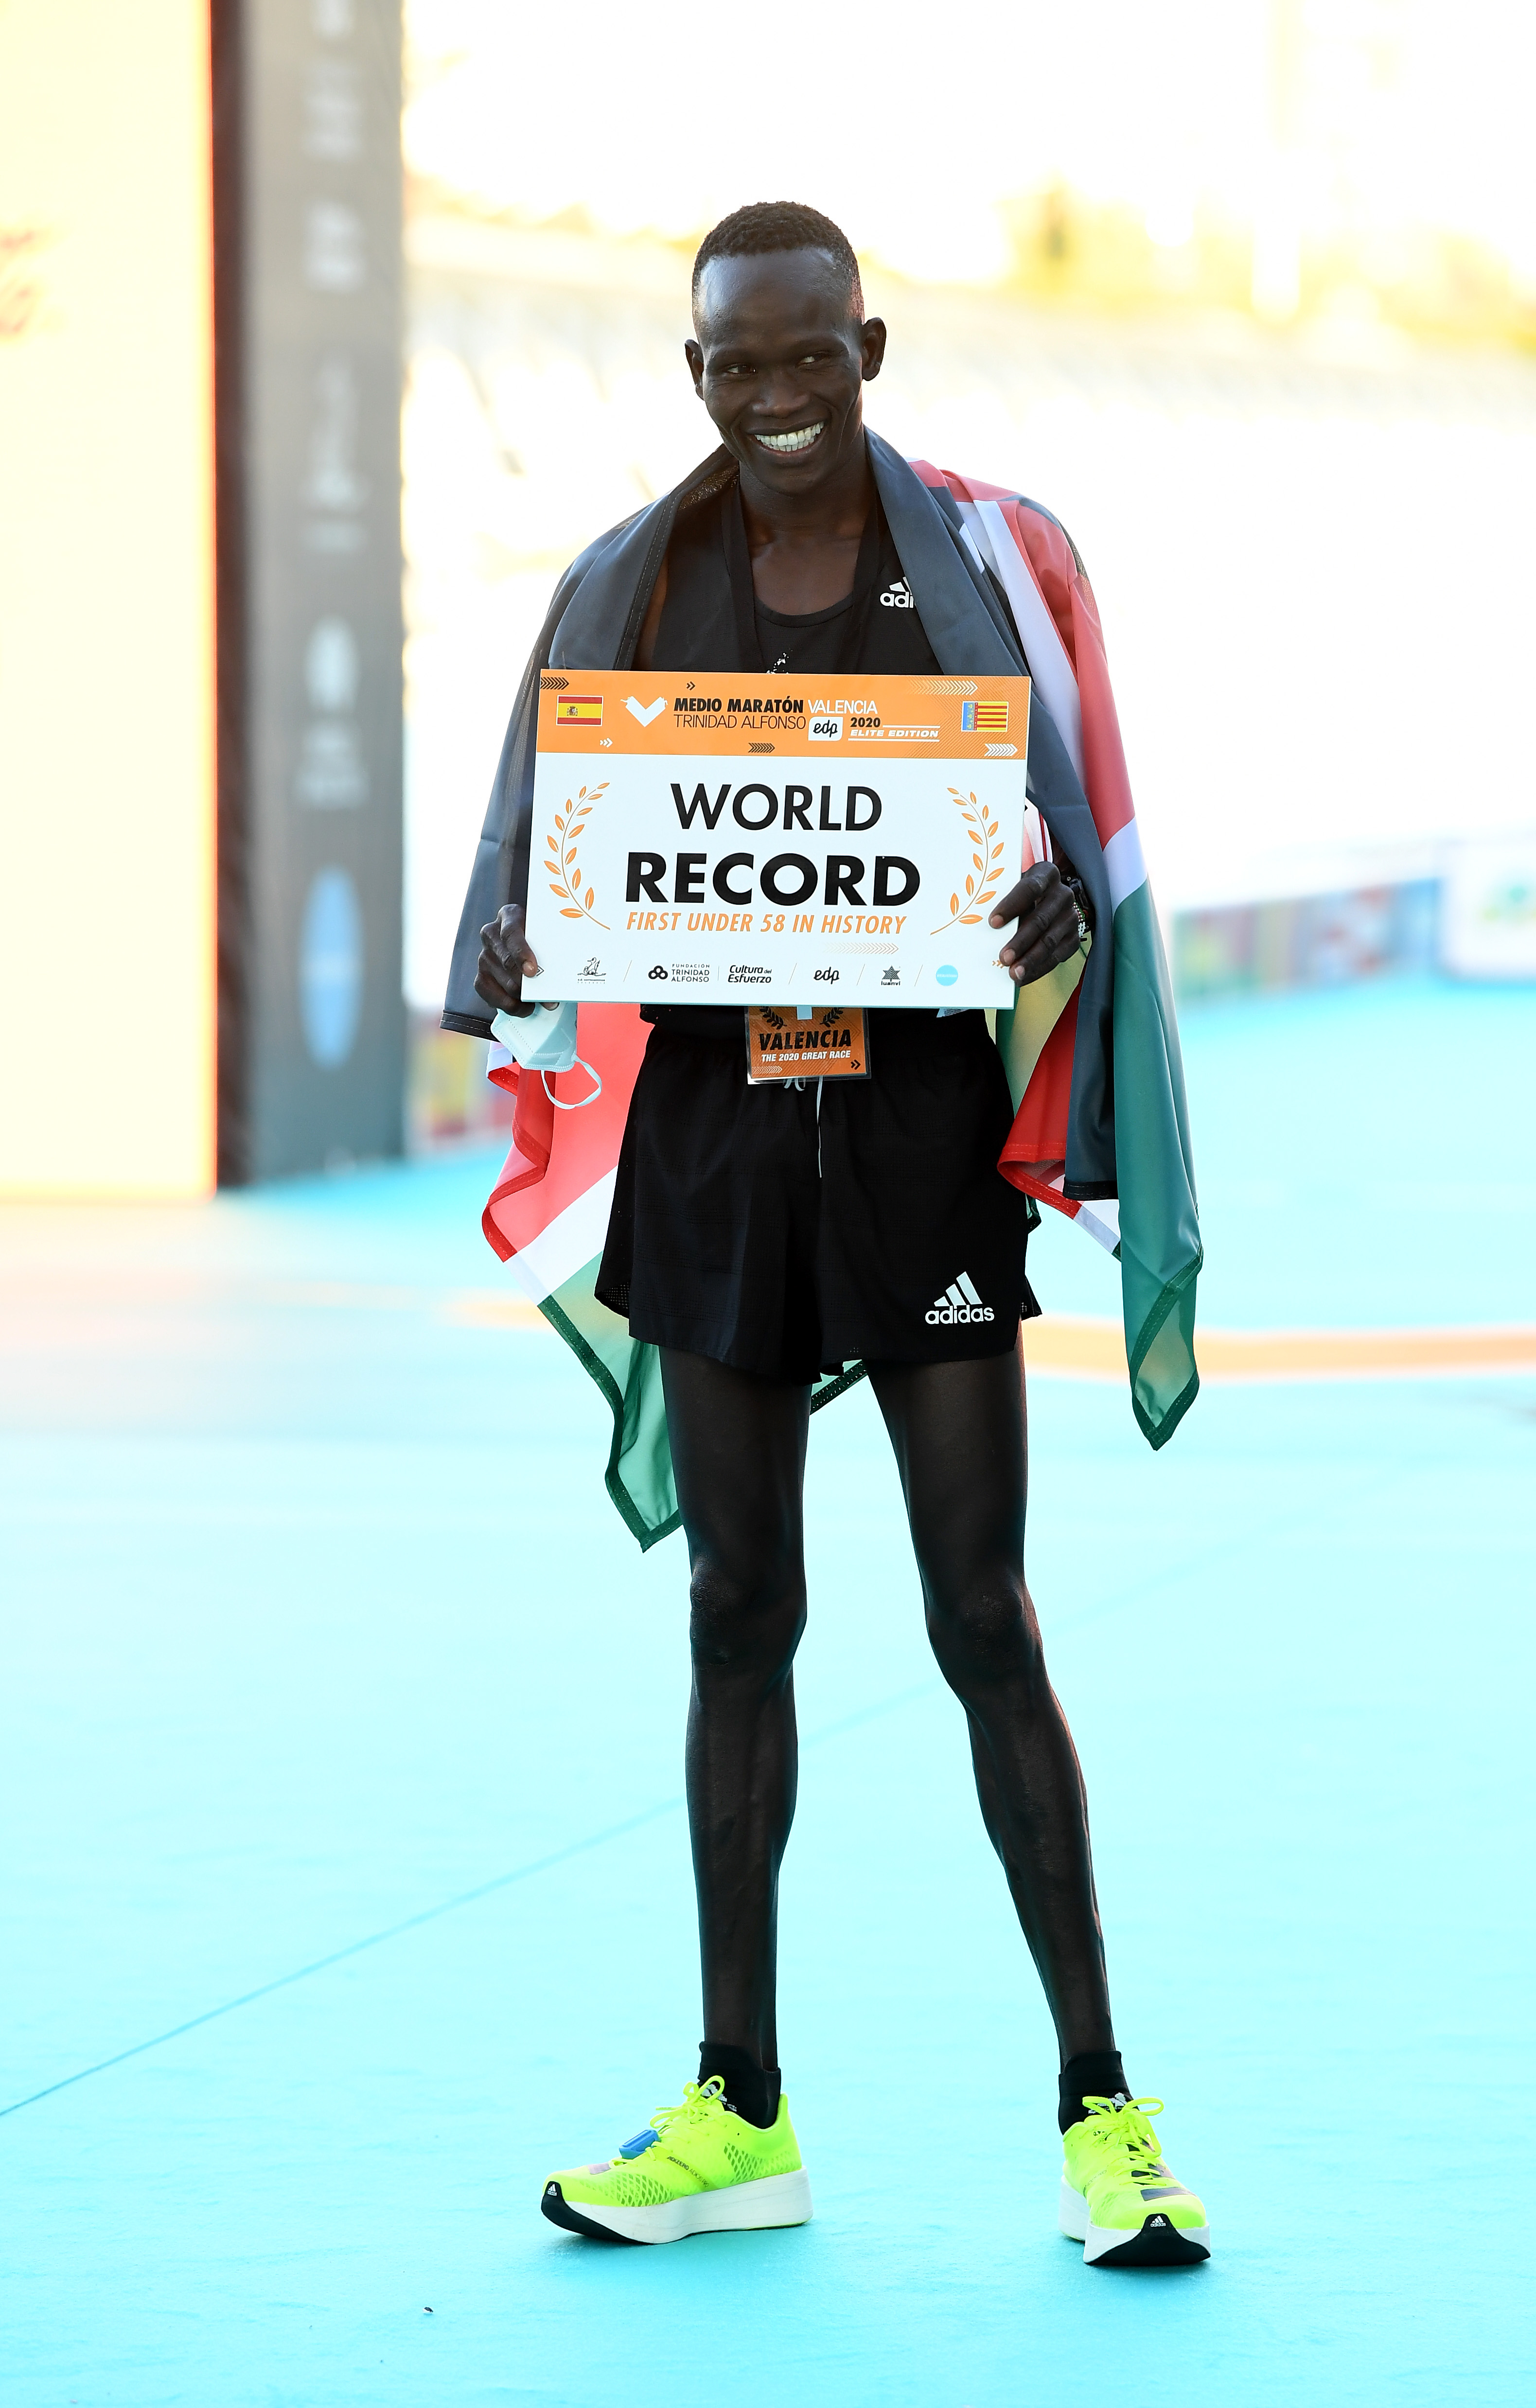 policy caravan Hopefully Four athletes break half marathon world record together - CGTN